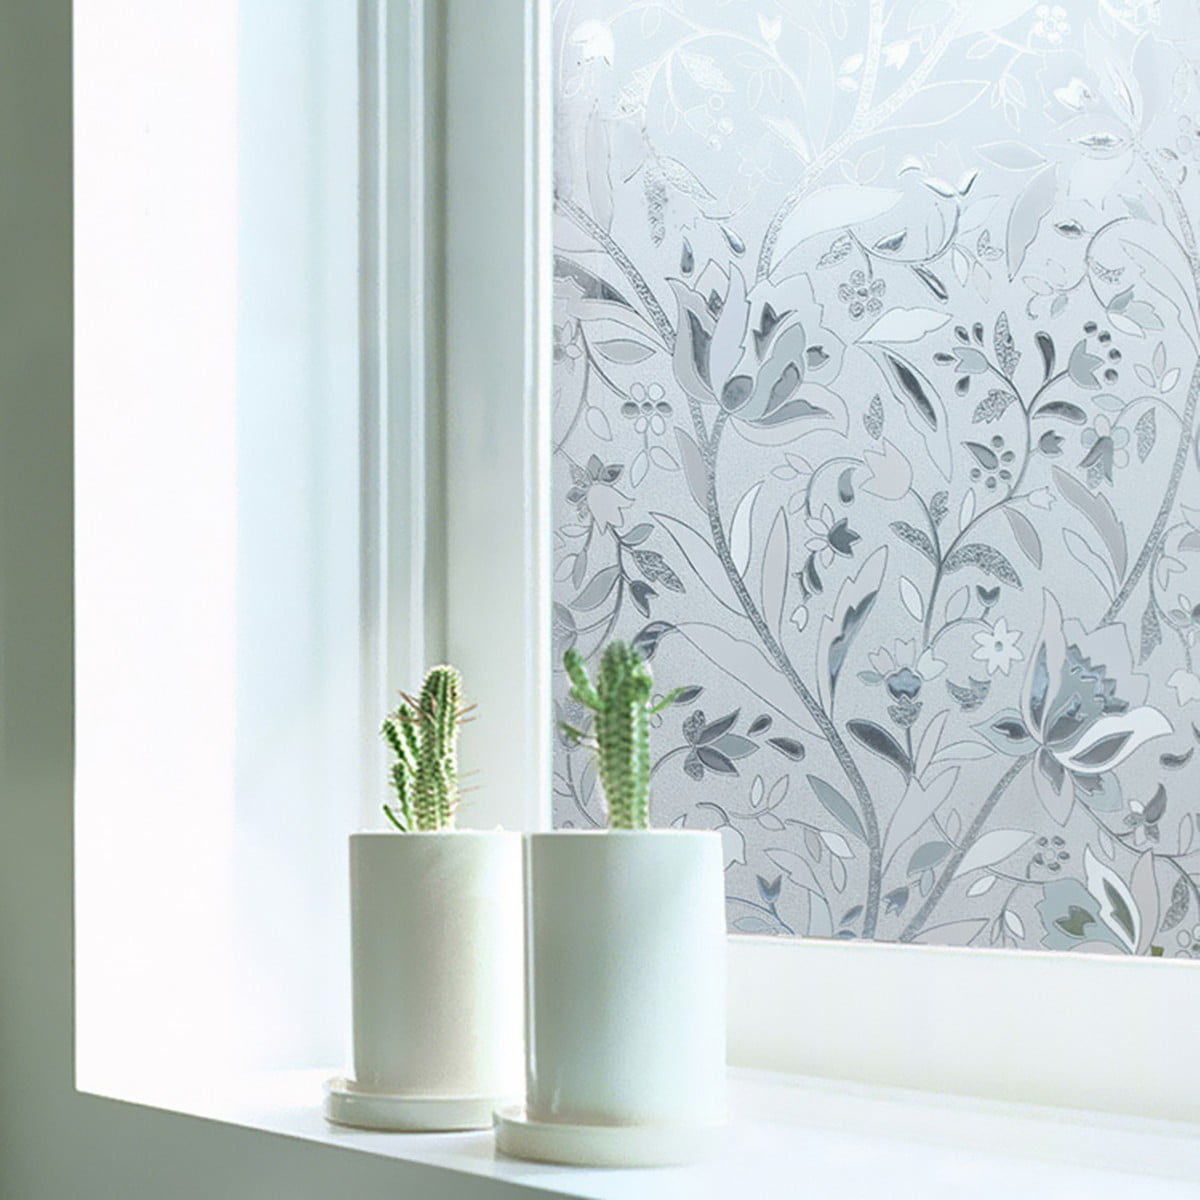 Bedroom Bathroom Home Waterproof Glass Window Privacy Film Sticker PVC Fros Q9L8